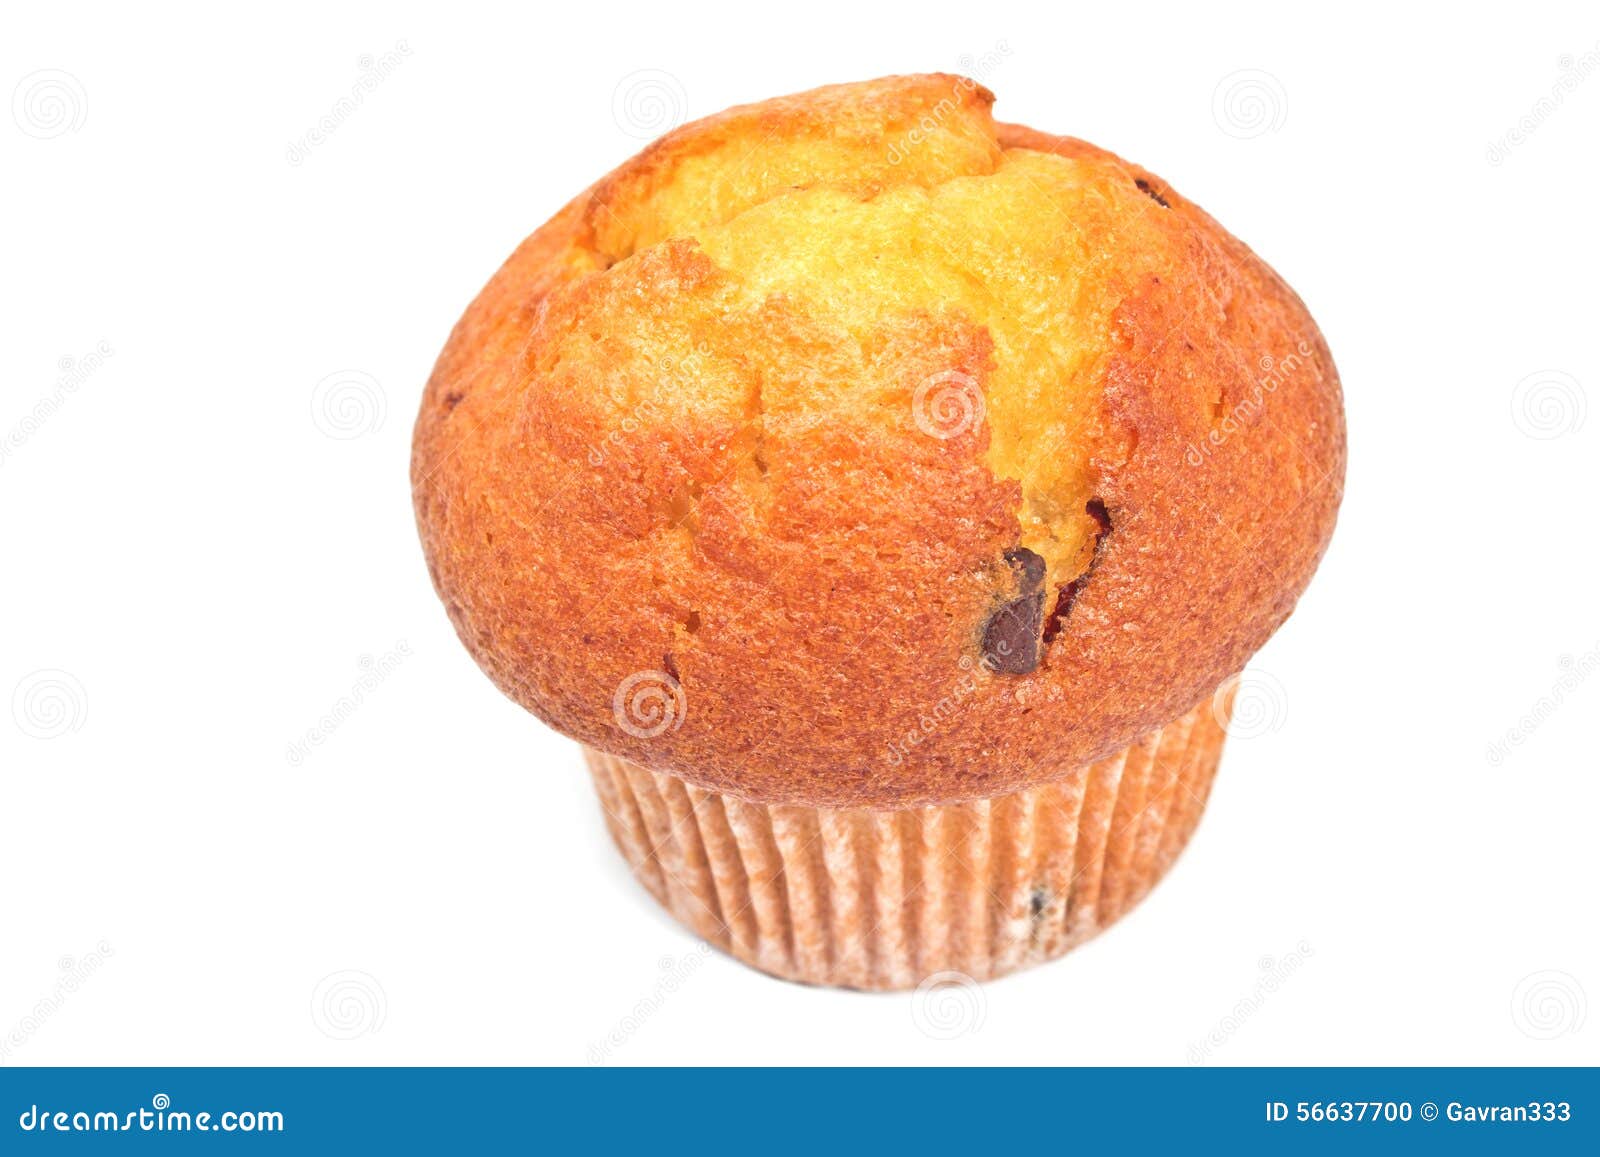 Blueberry muffin stock photo. Image of single, blueberry - 56637700